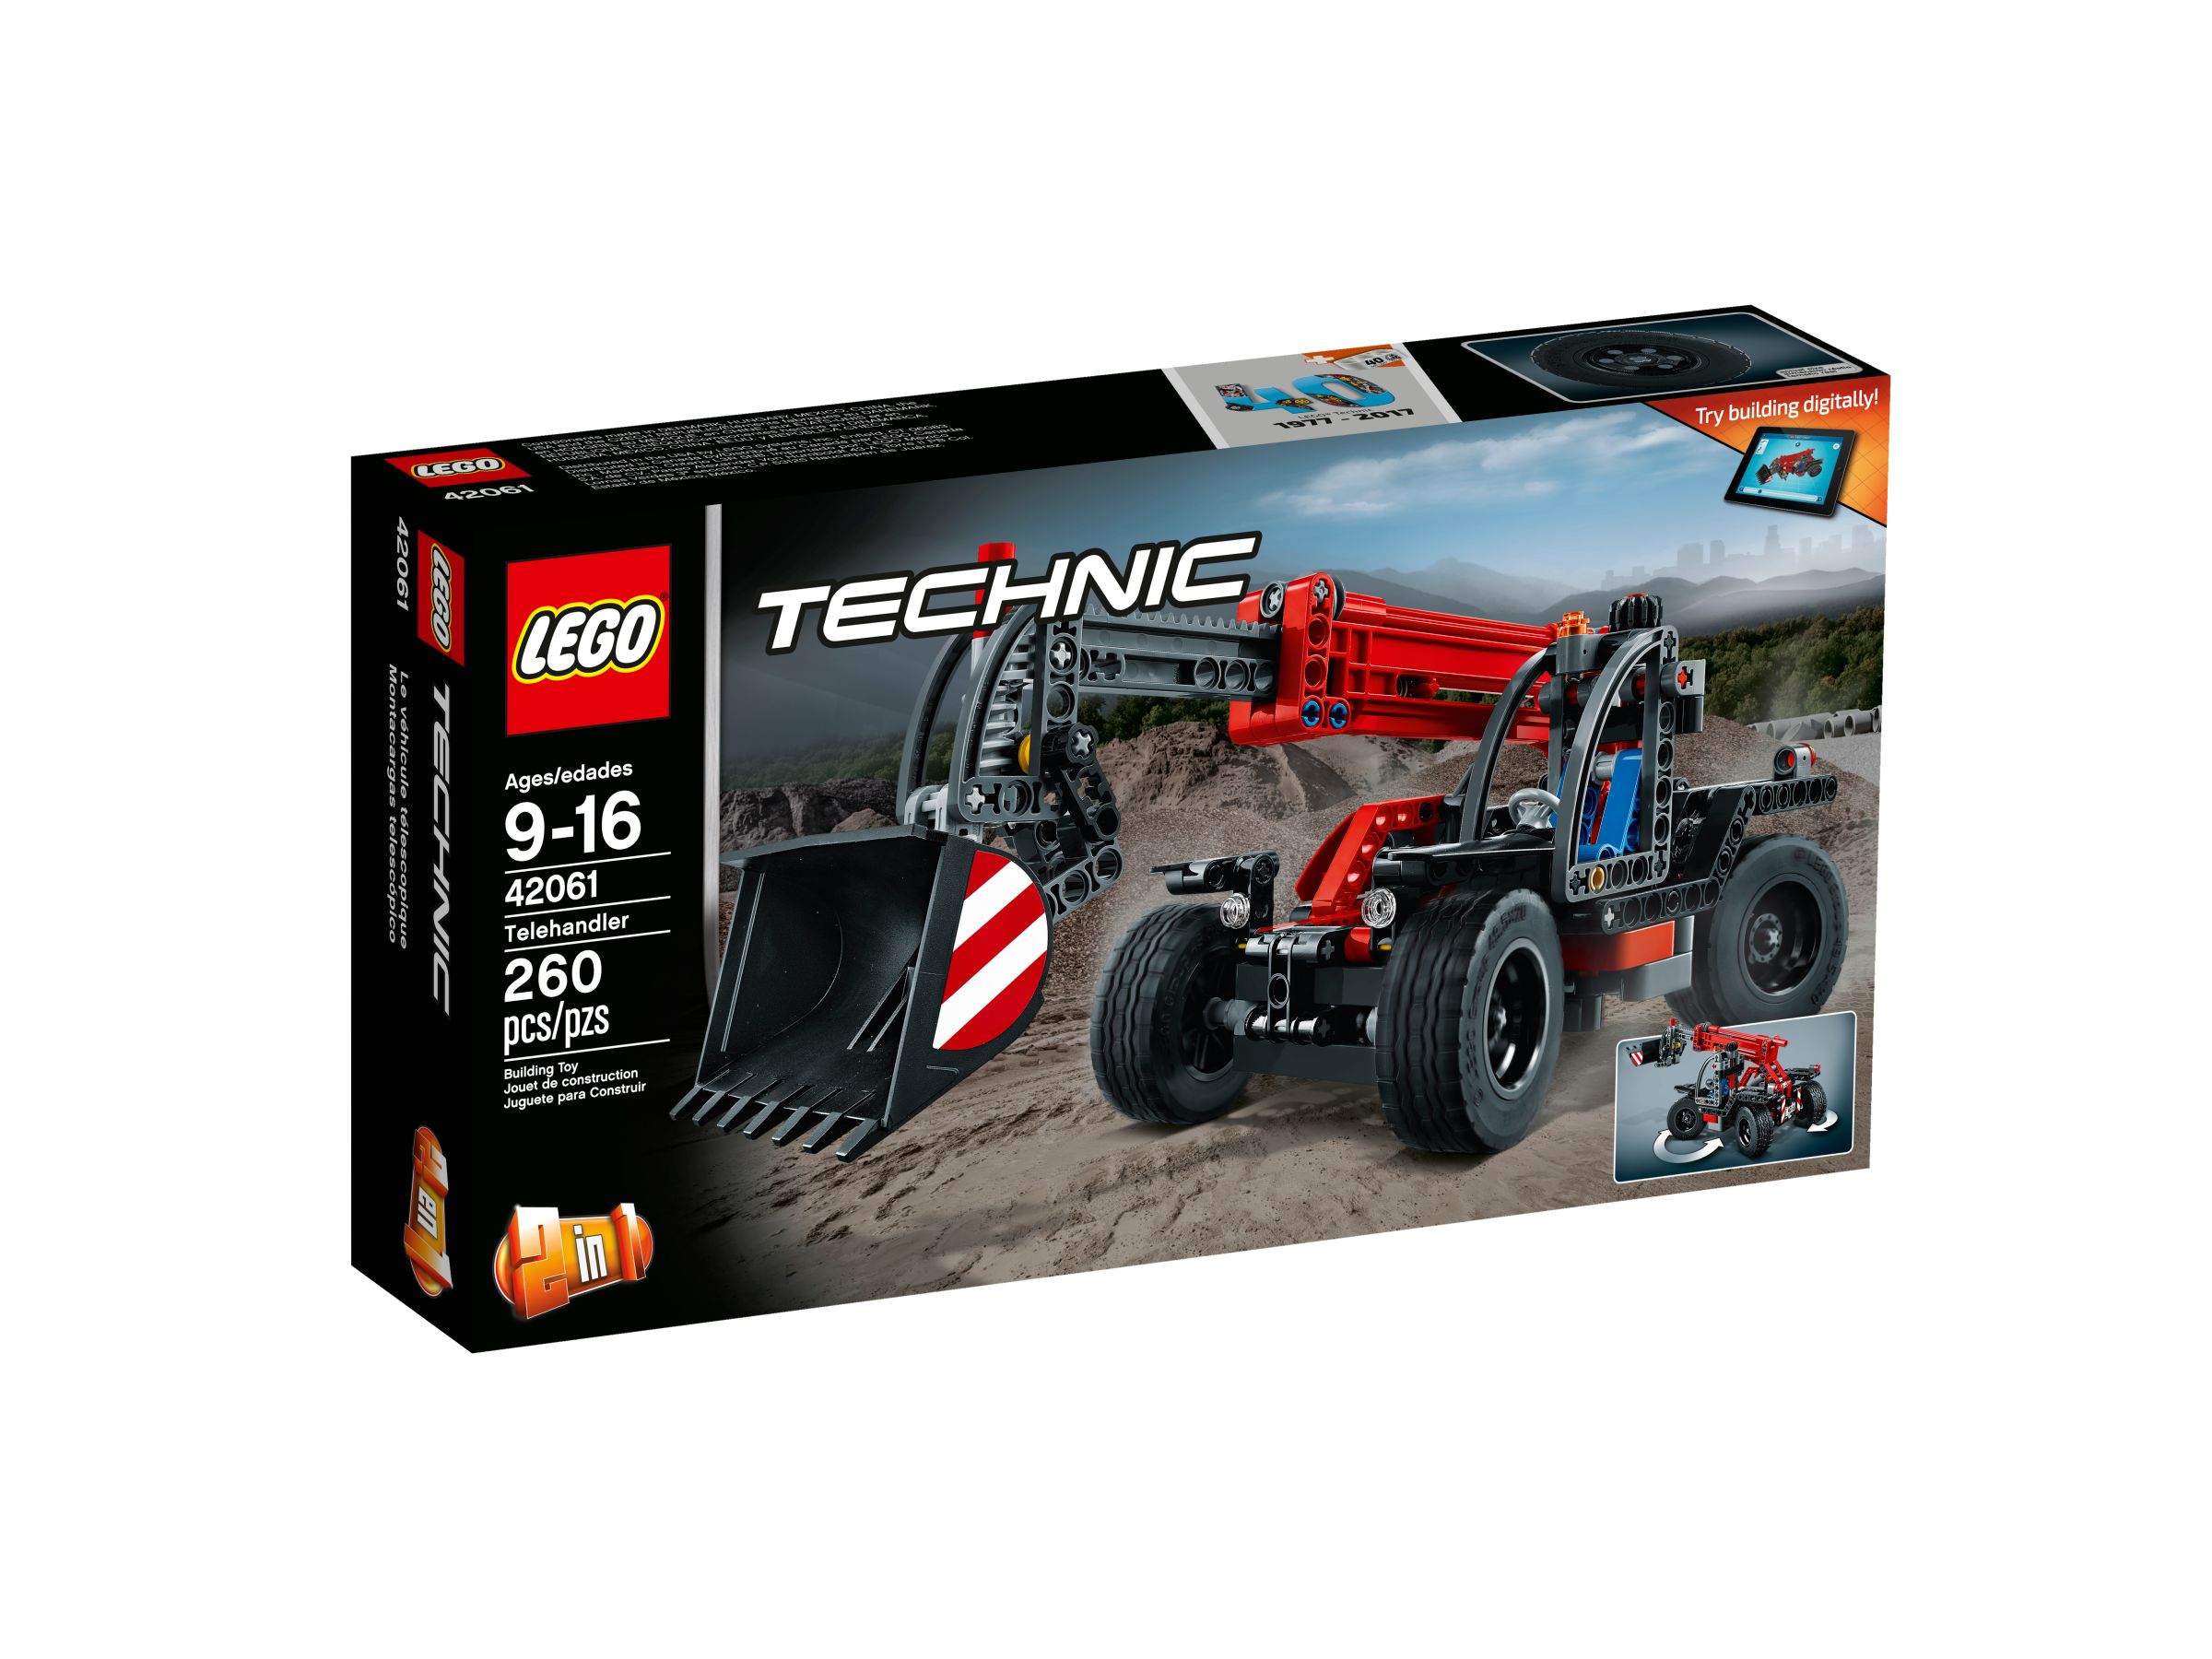 LEGO Technic 42061 Teleskoplader LEGO_42061_alt1.jpg